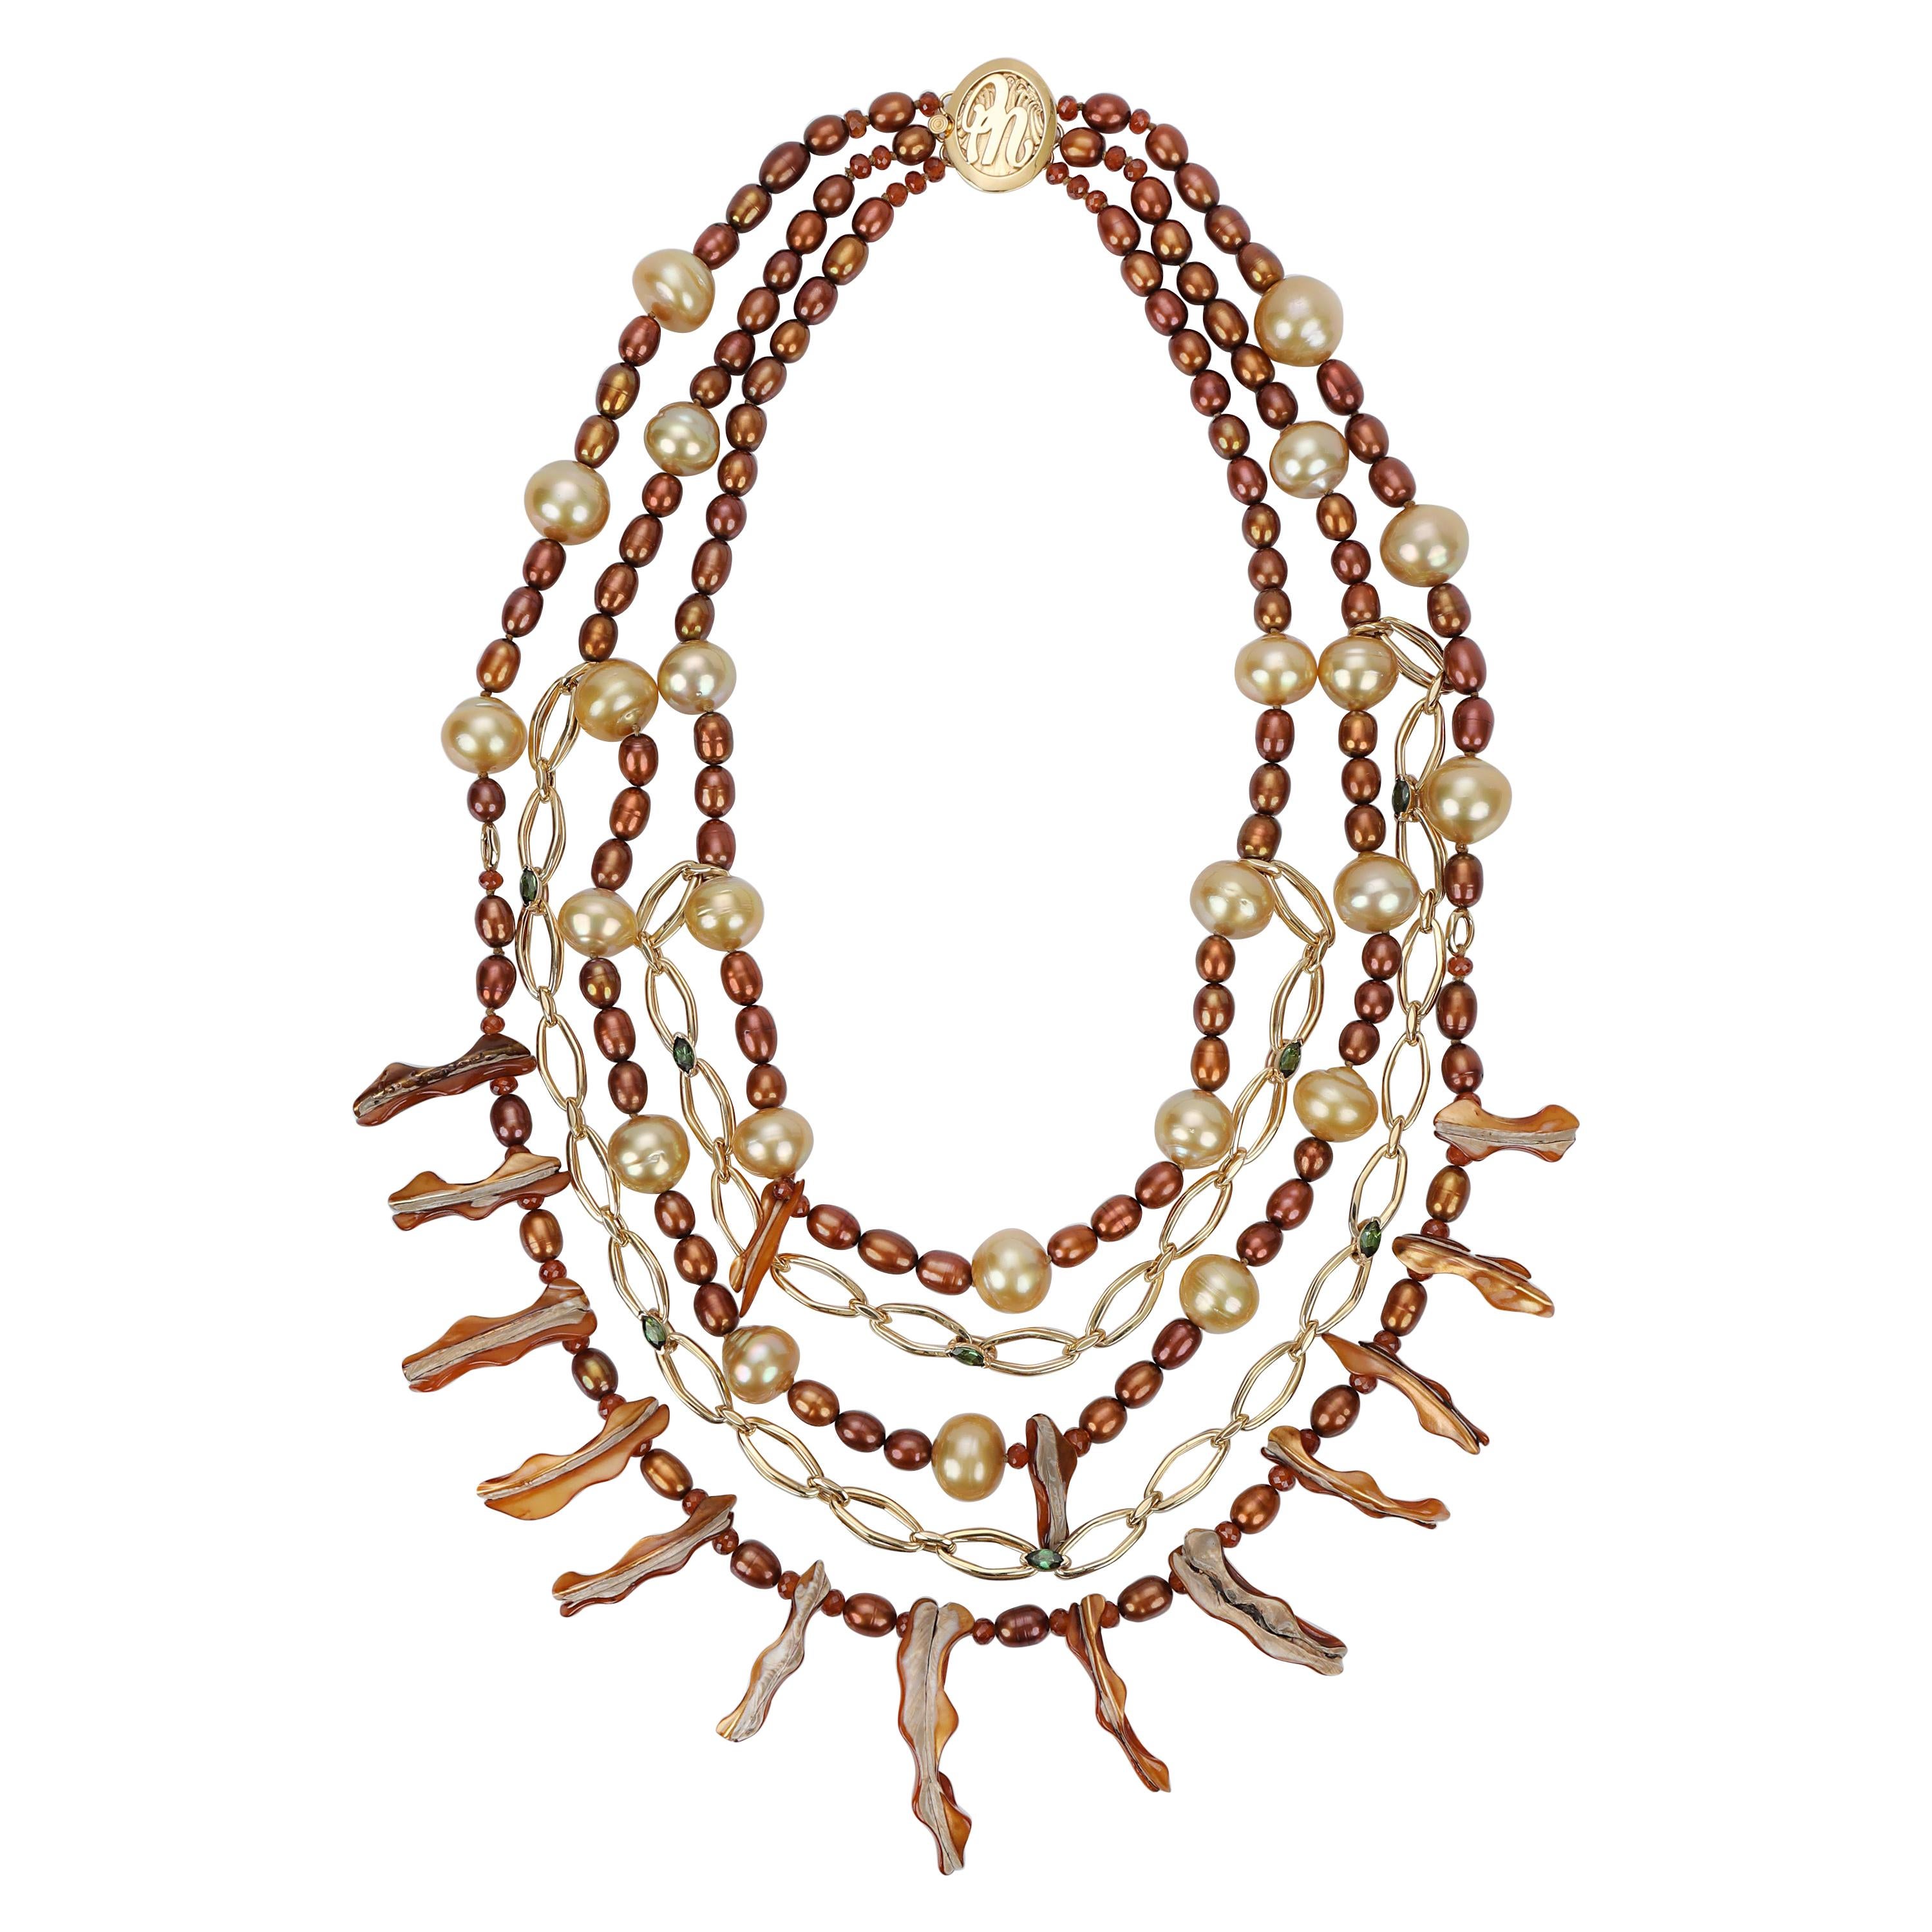 A Pearl, Spessartite Garnet, Tourmaline, and Gold Bib Necklace